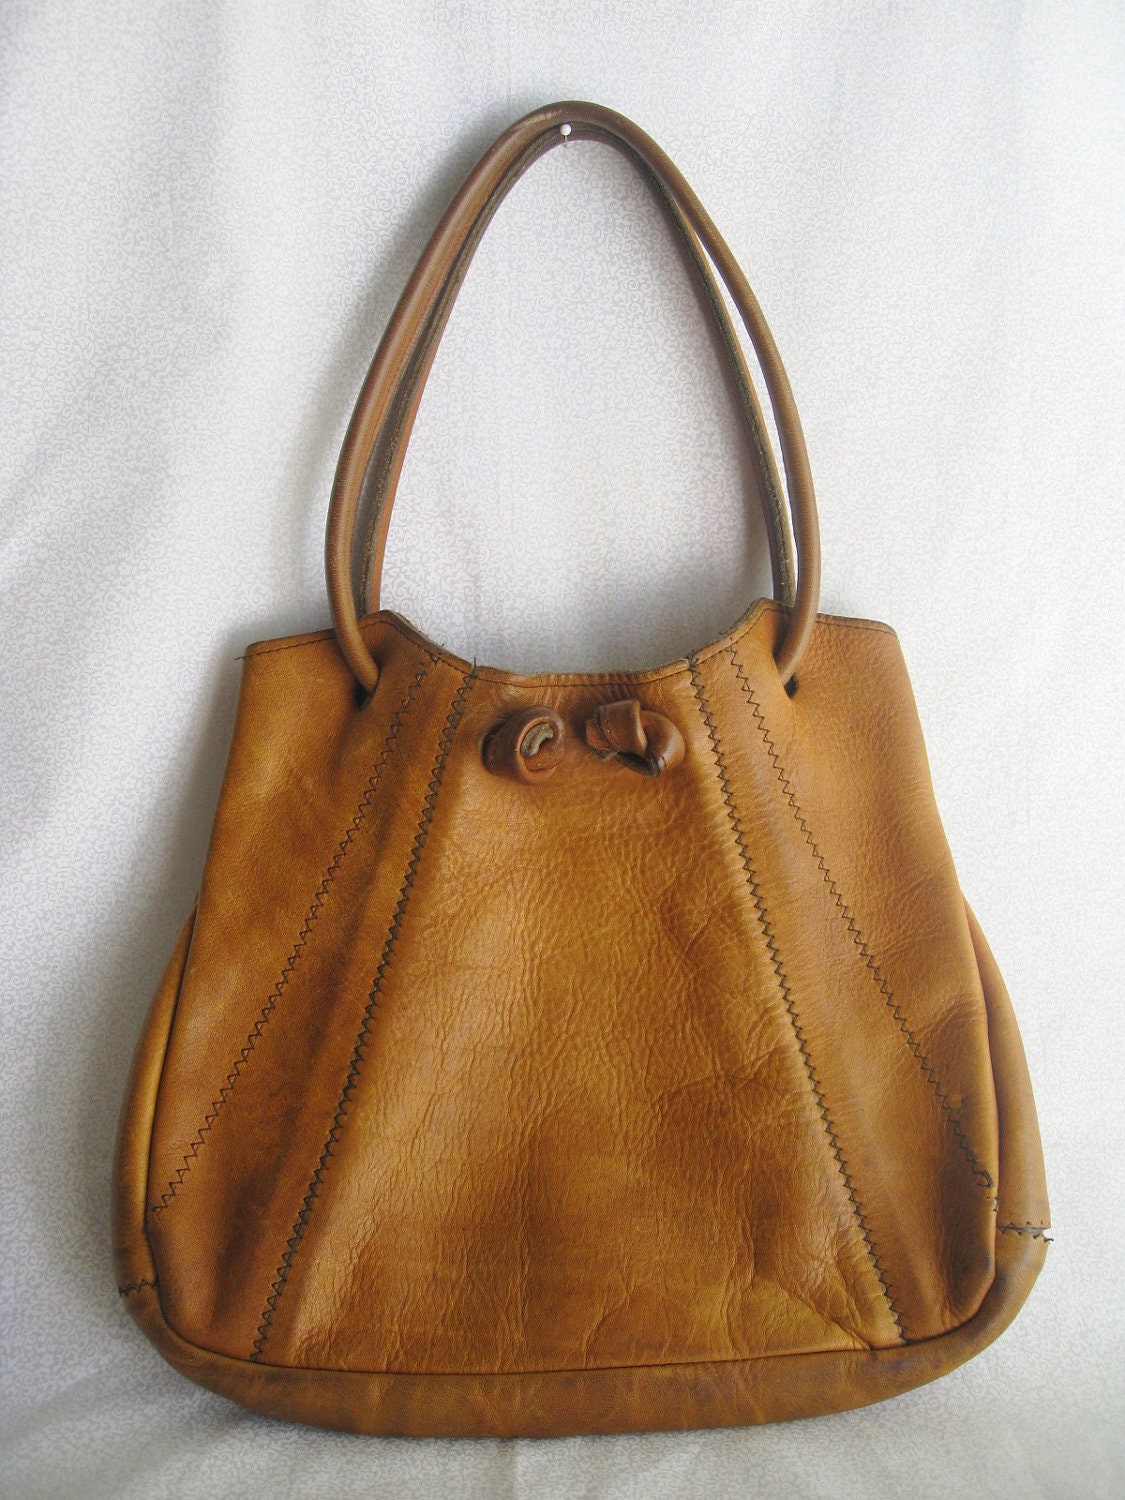 Boho leather bag/vintage caramel color leather purse/bohemian